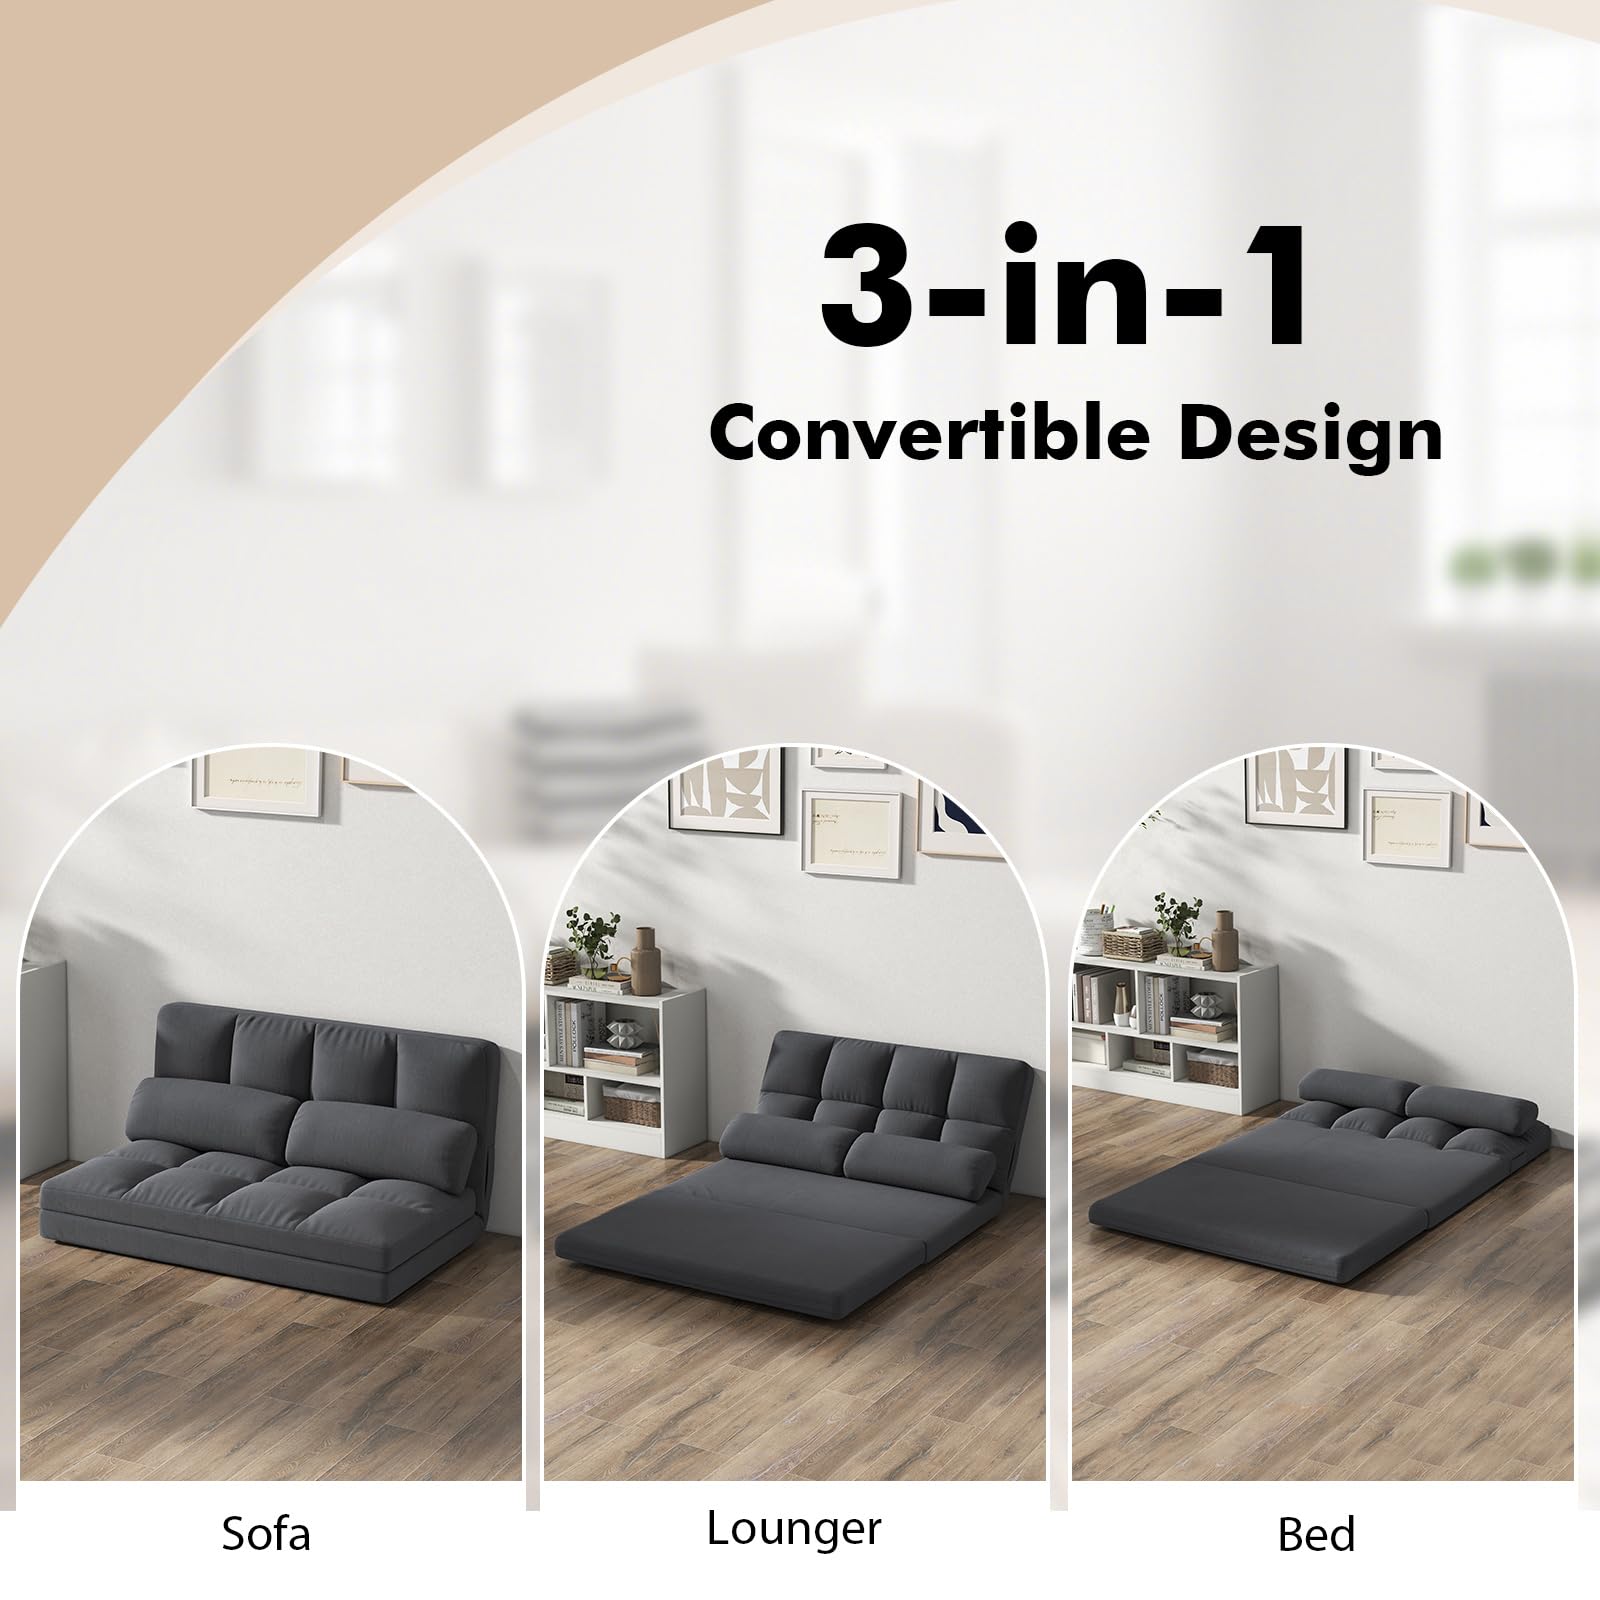 Giantex Floor Sofa Bed with 2 Pillows, Convertible Sofa Couch